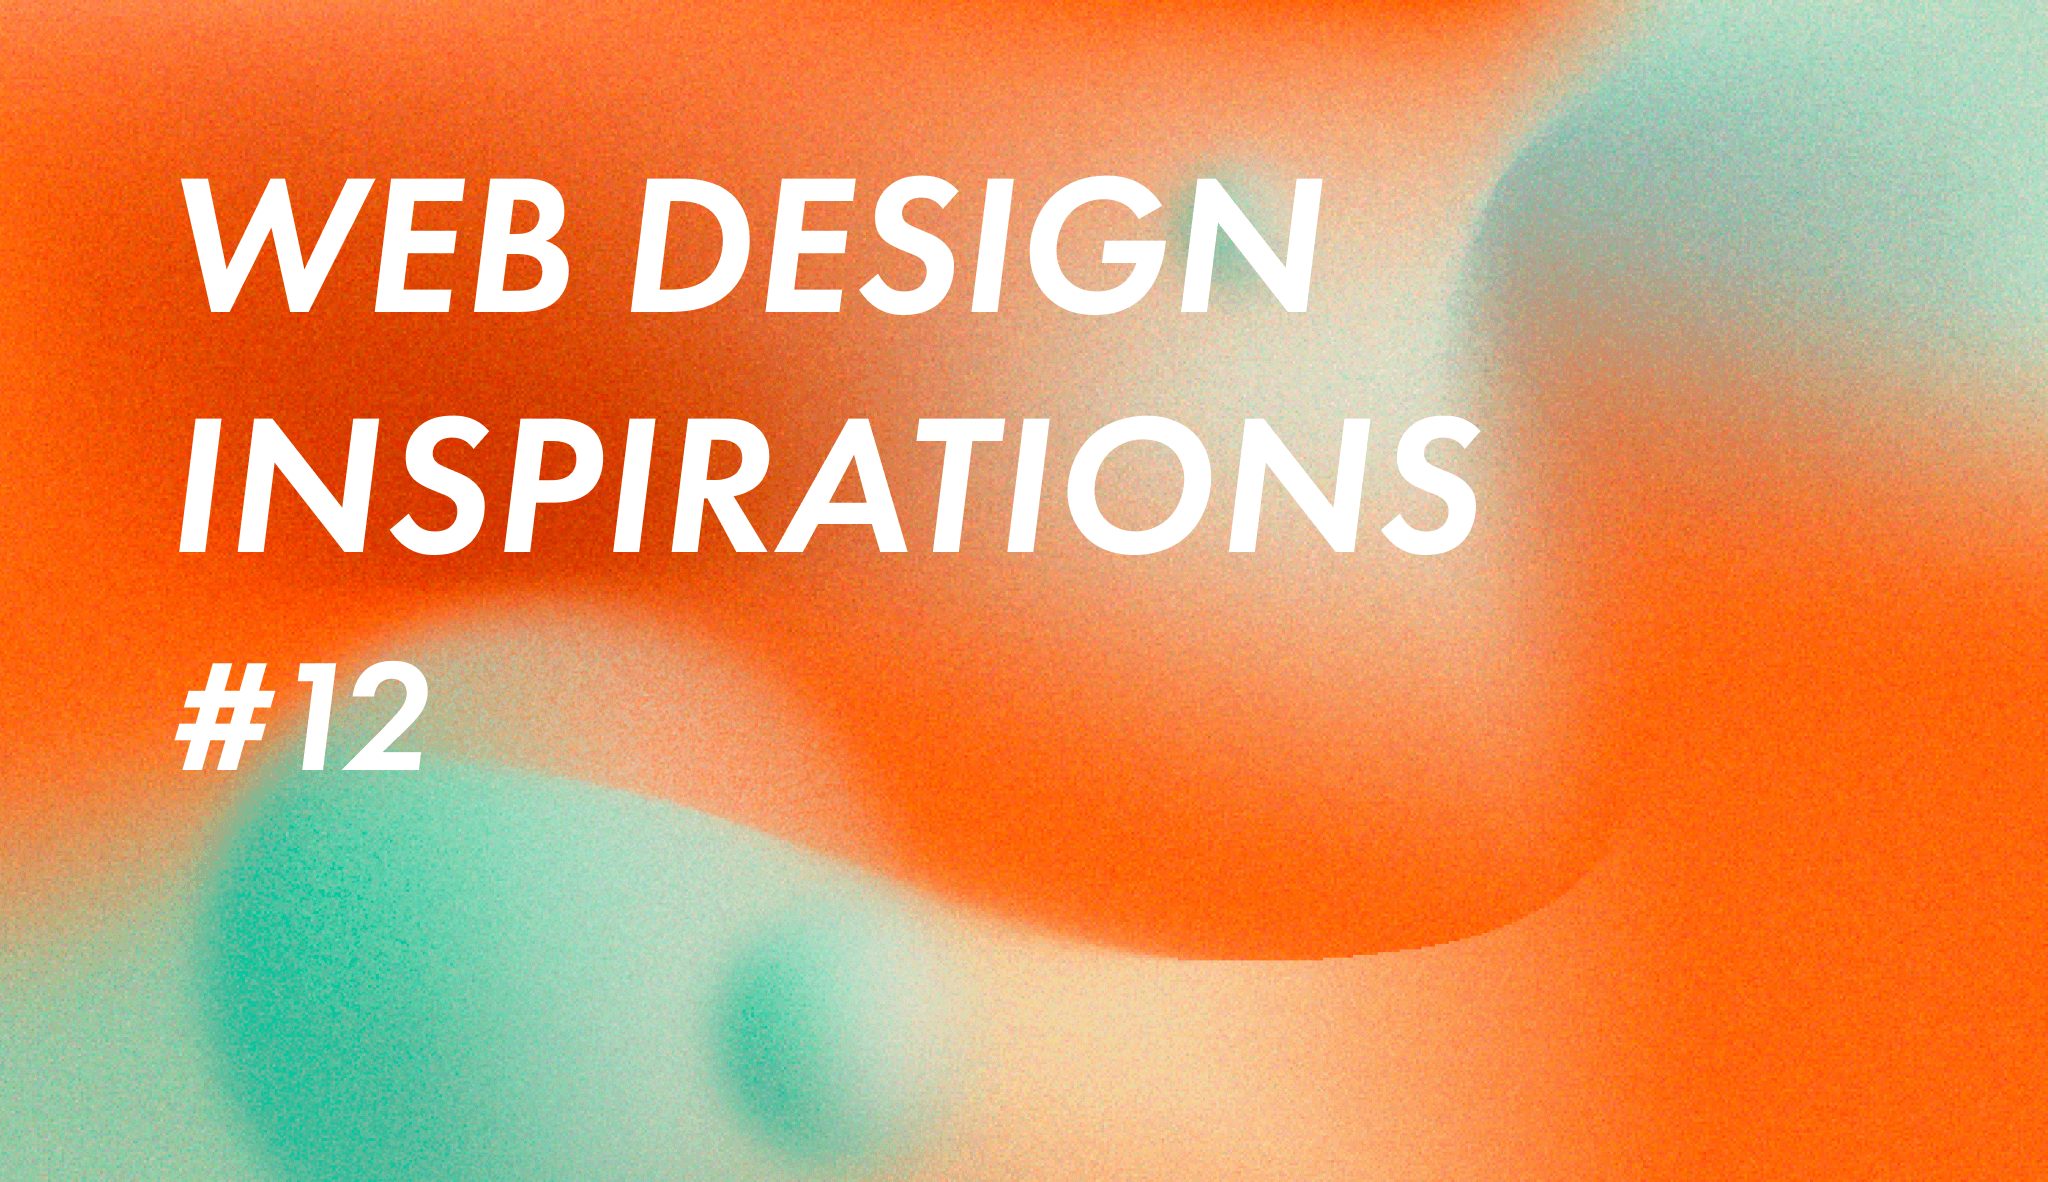 Web Design Inspirations #12